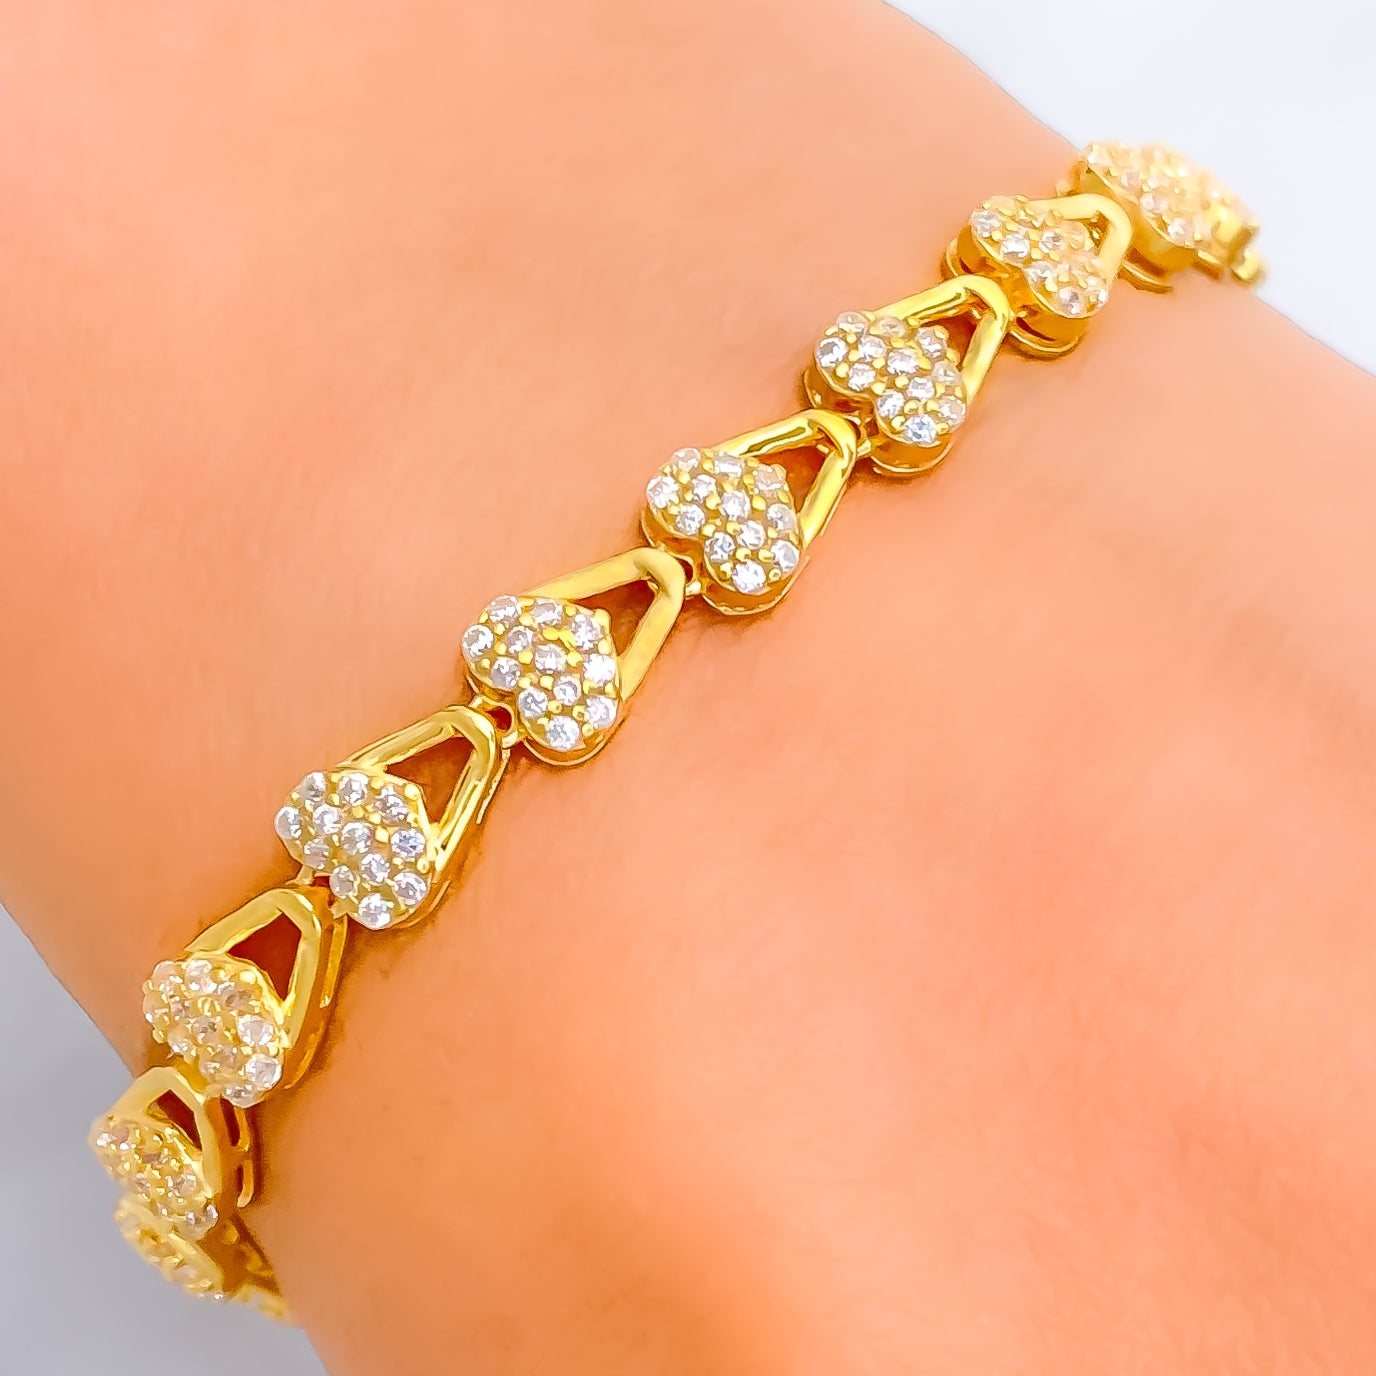 Unique Design Golden Beautiful Rose Bracelet at Rs 40 in Greater Noida |  ID: 24282809012